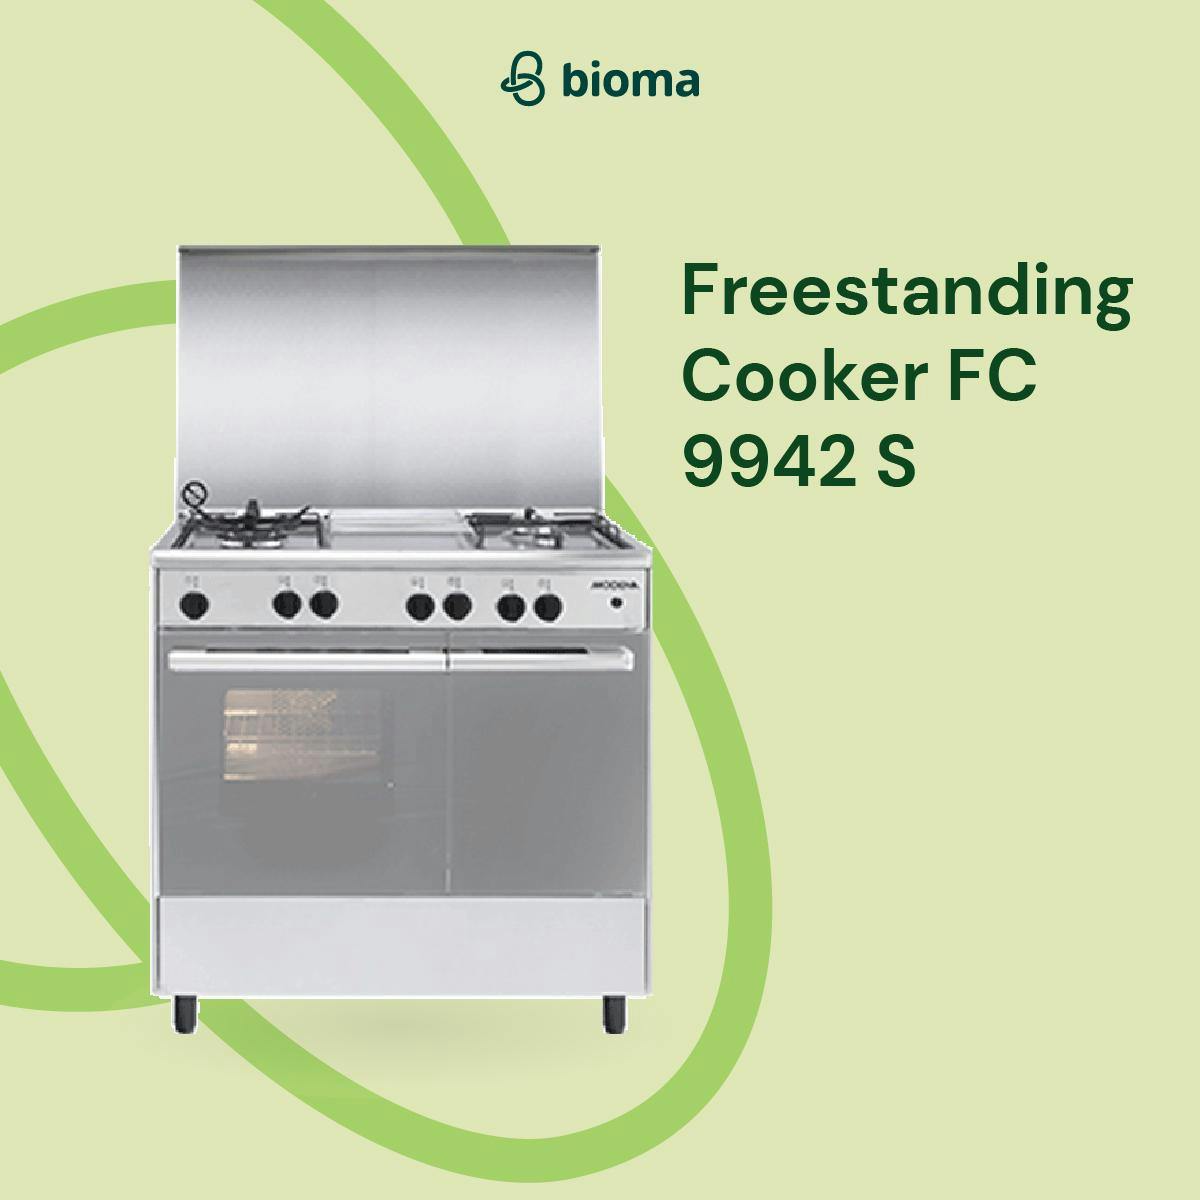 Freestanding Cooker FC 9942 S